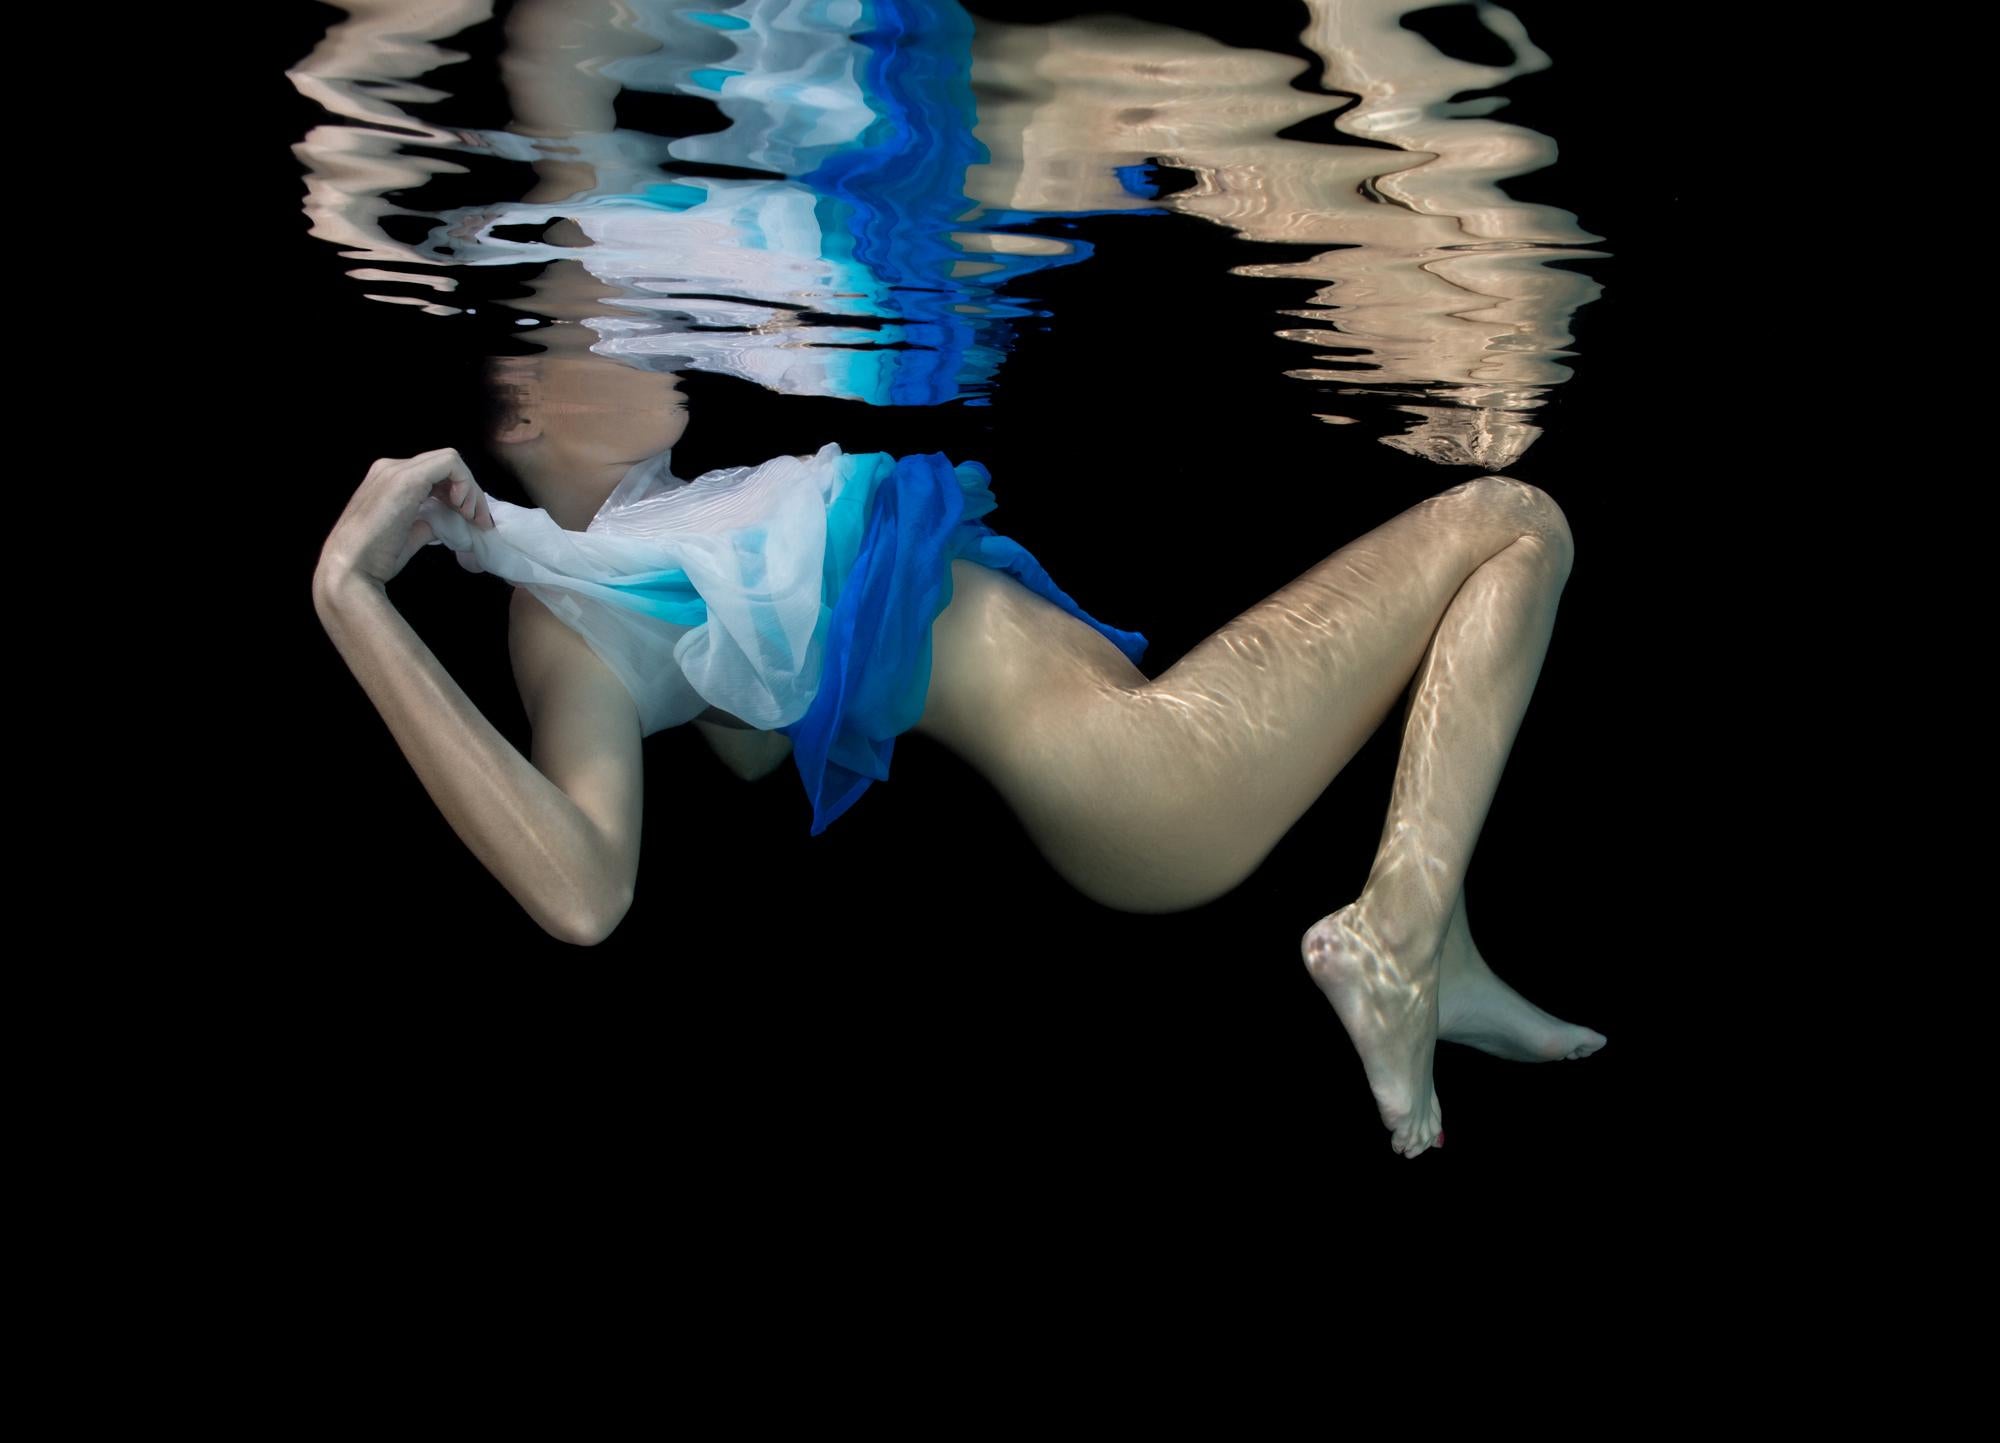 Alex Sher Figurative Photograph - White and Blue - underwater semi-nude photograph - archival pigment 25" x 35"